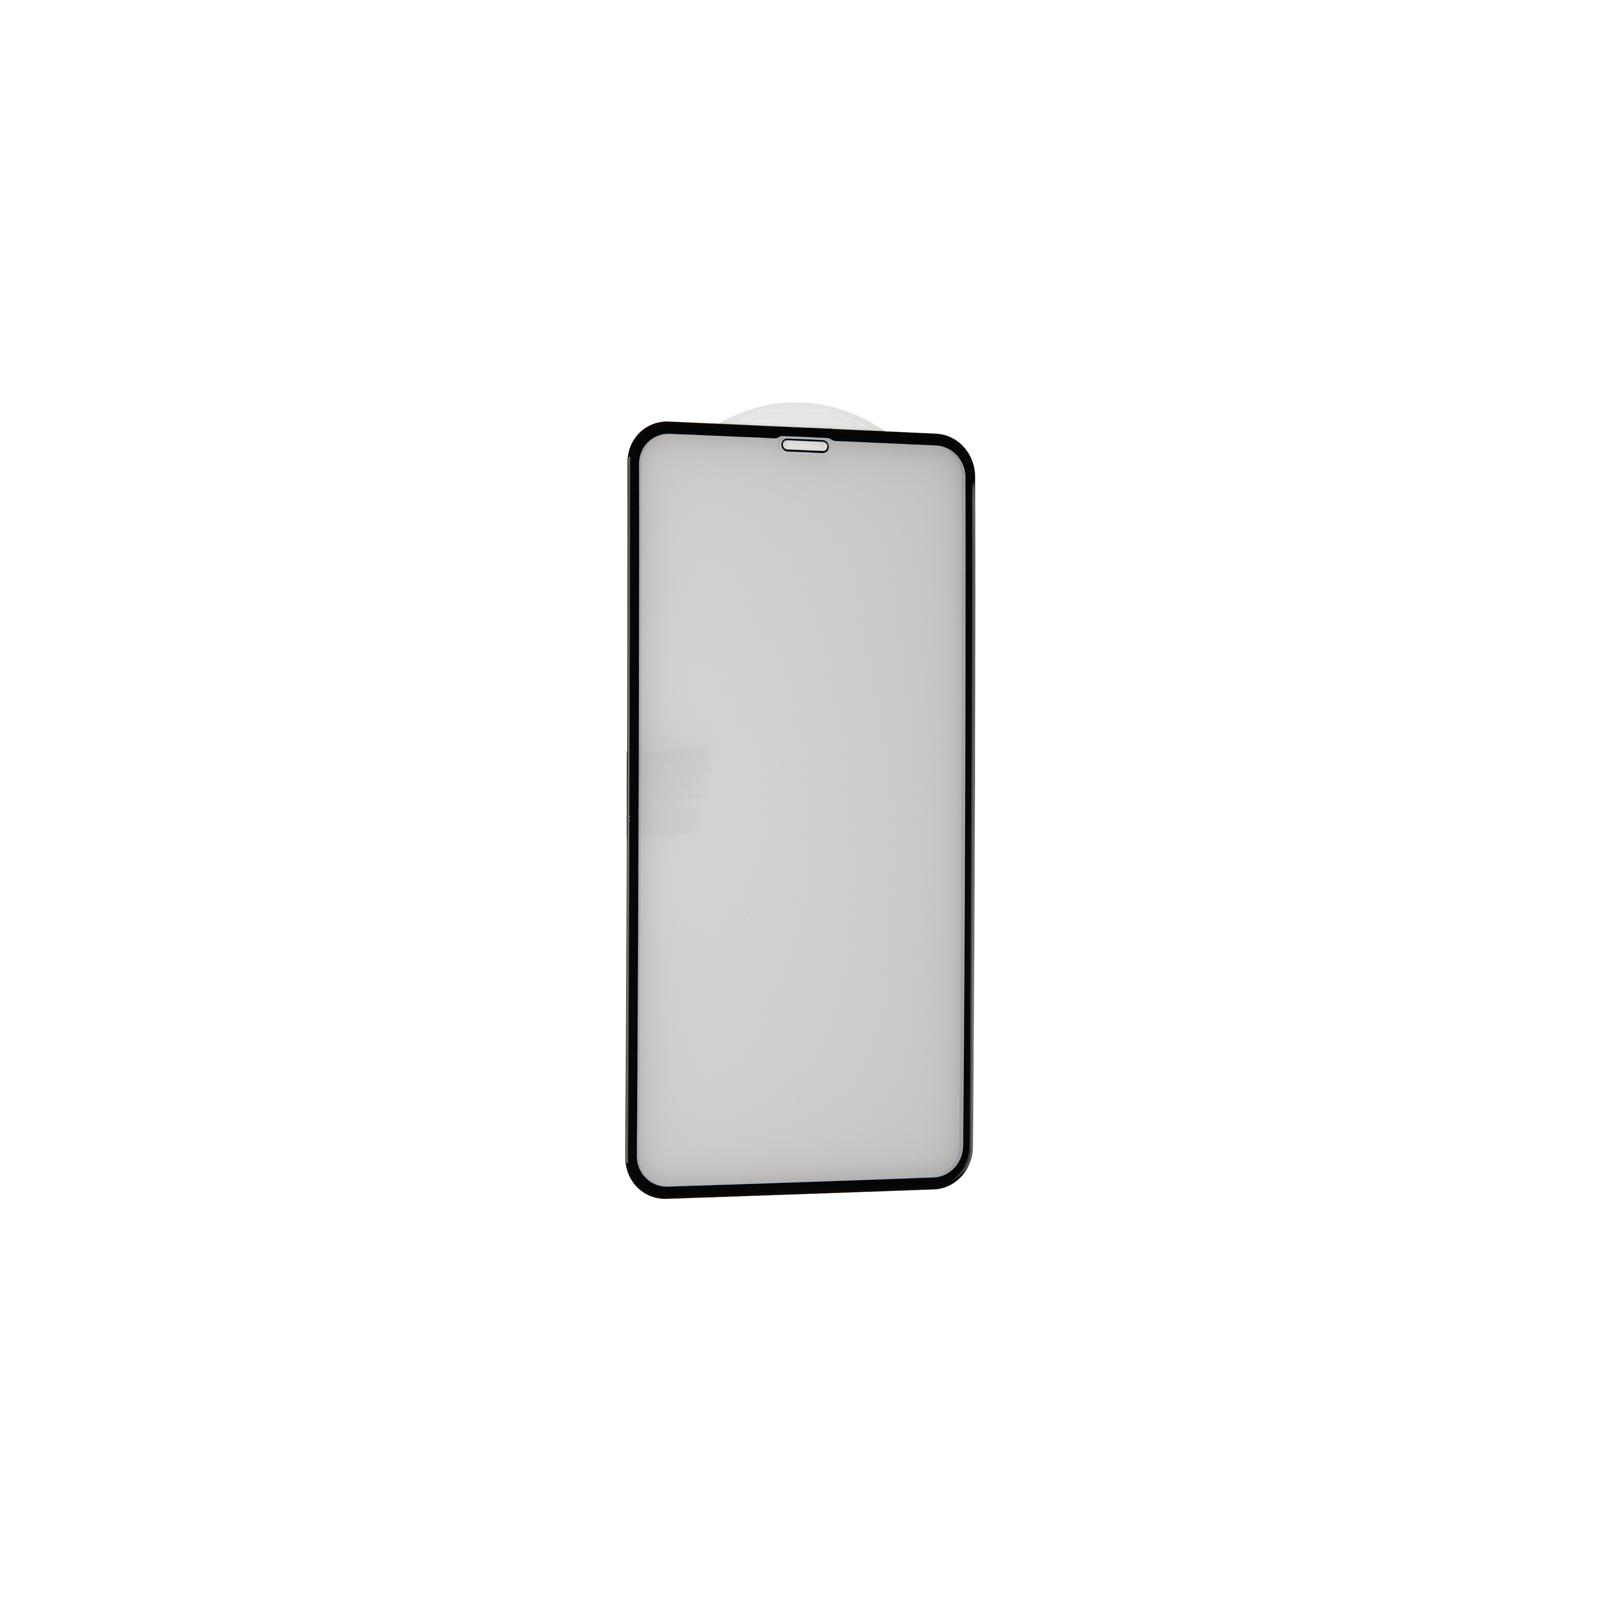 Стекло защитное Gelius Pro 5D Clear Glass for iPhone 11 Pro Max Black (00000075728)